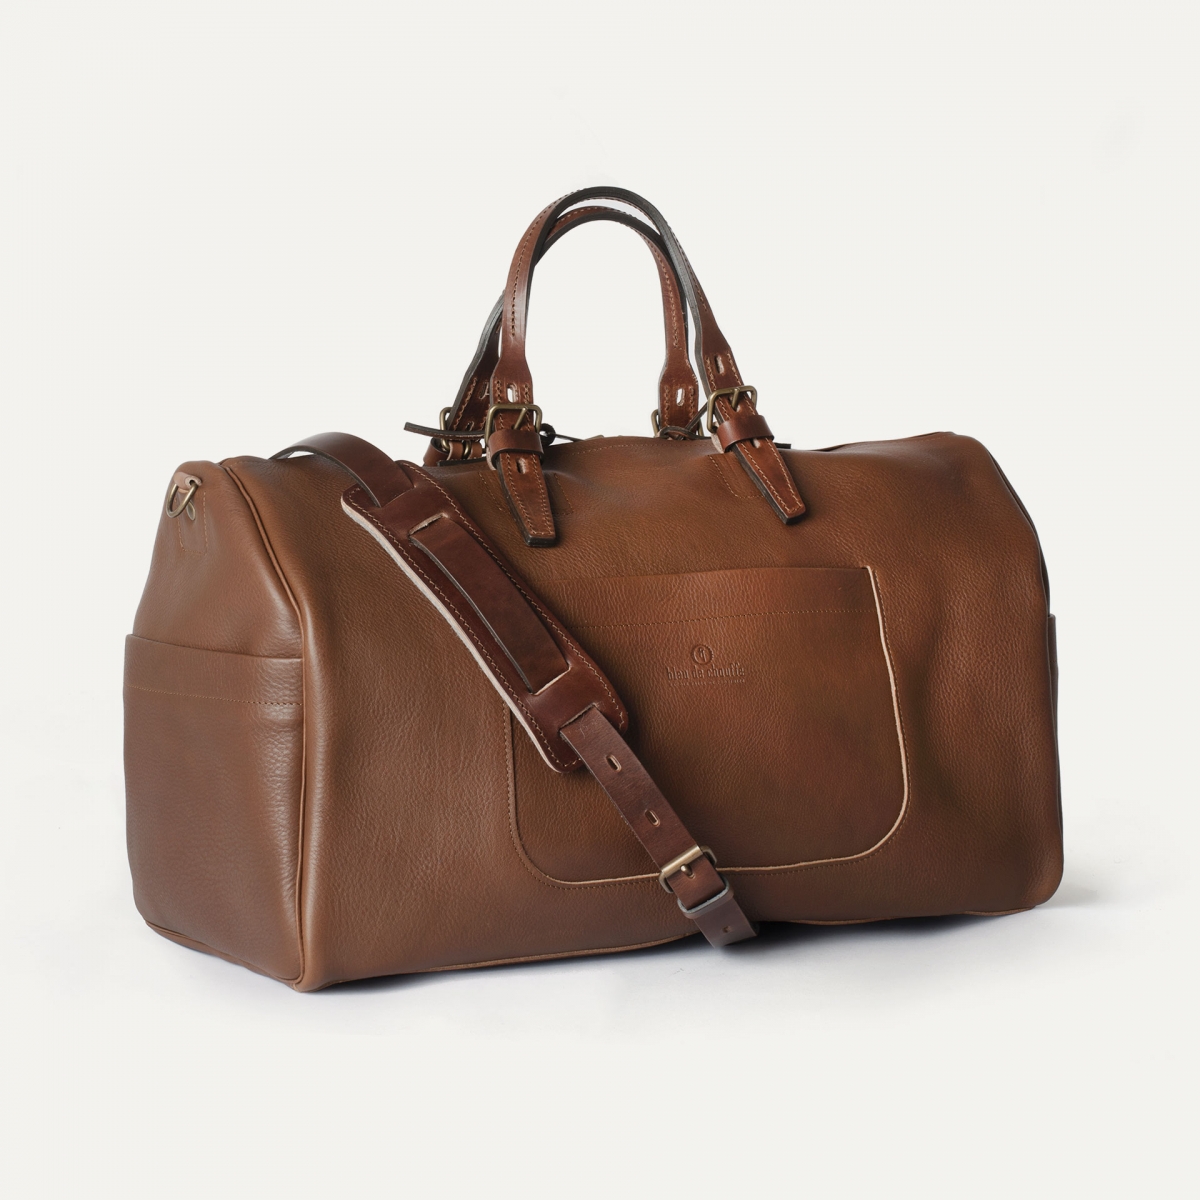 Leather Duffle Bag HOBO - Brown I Travel bag for Men I Made in France